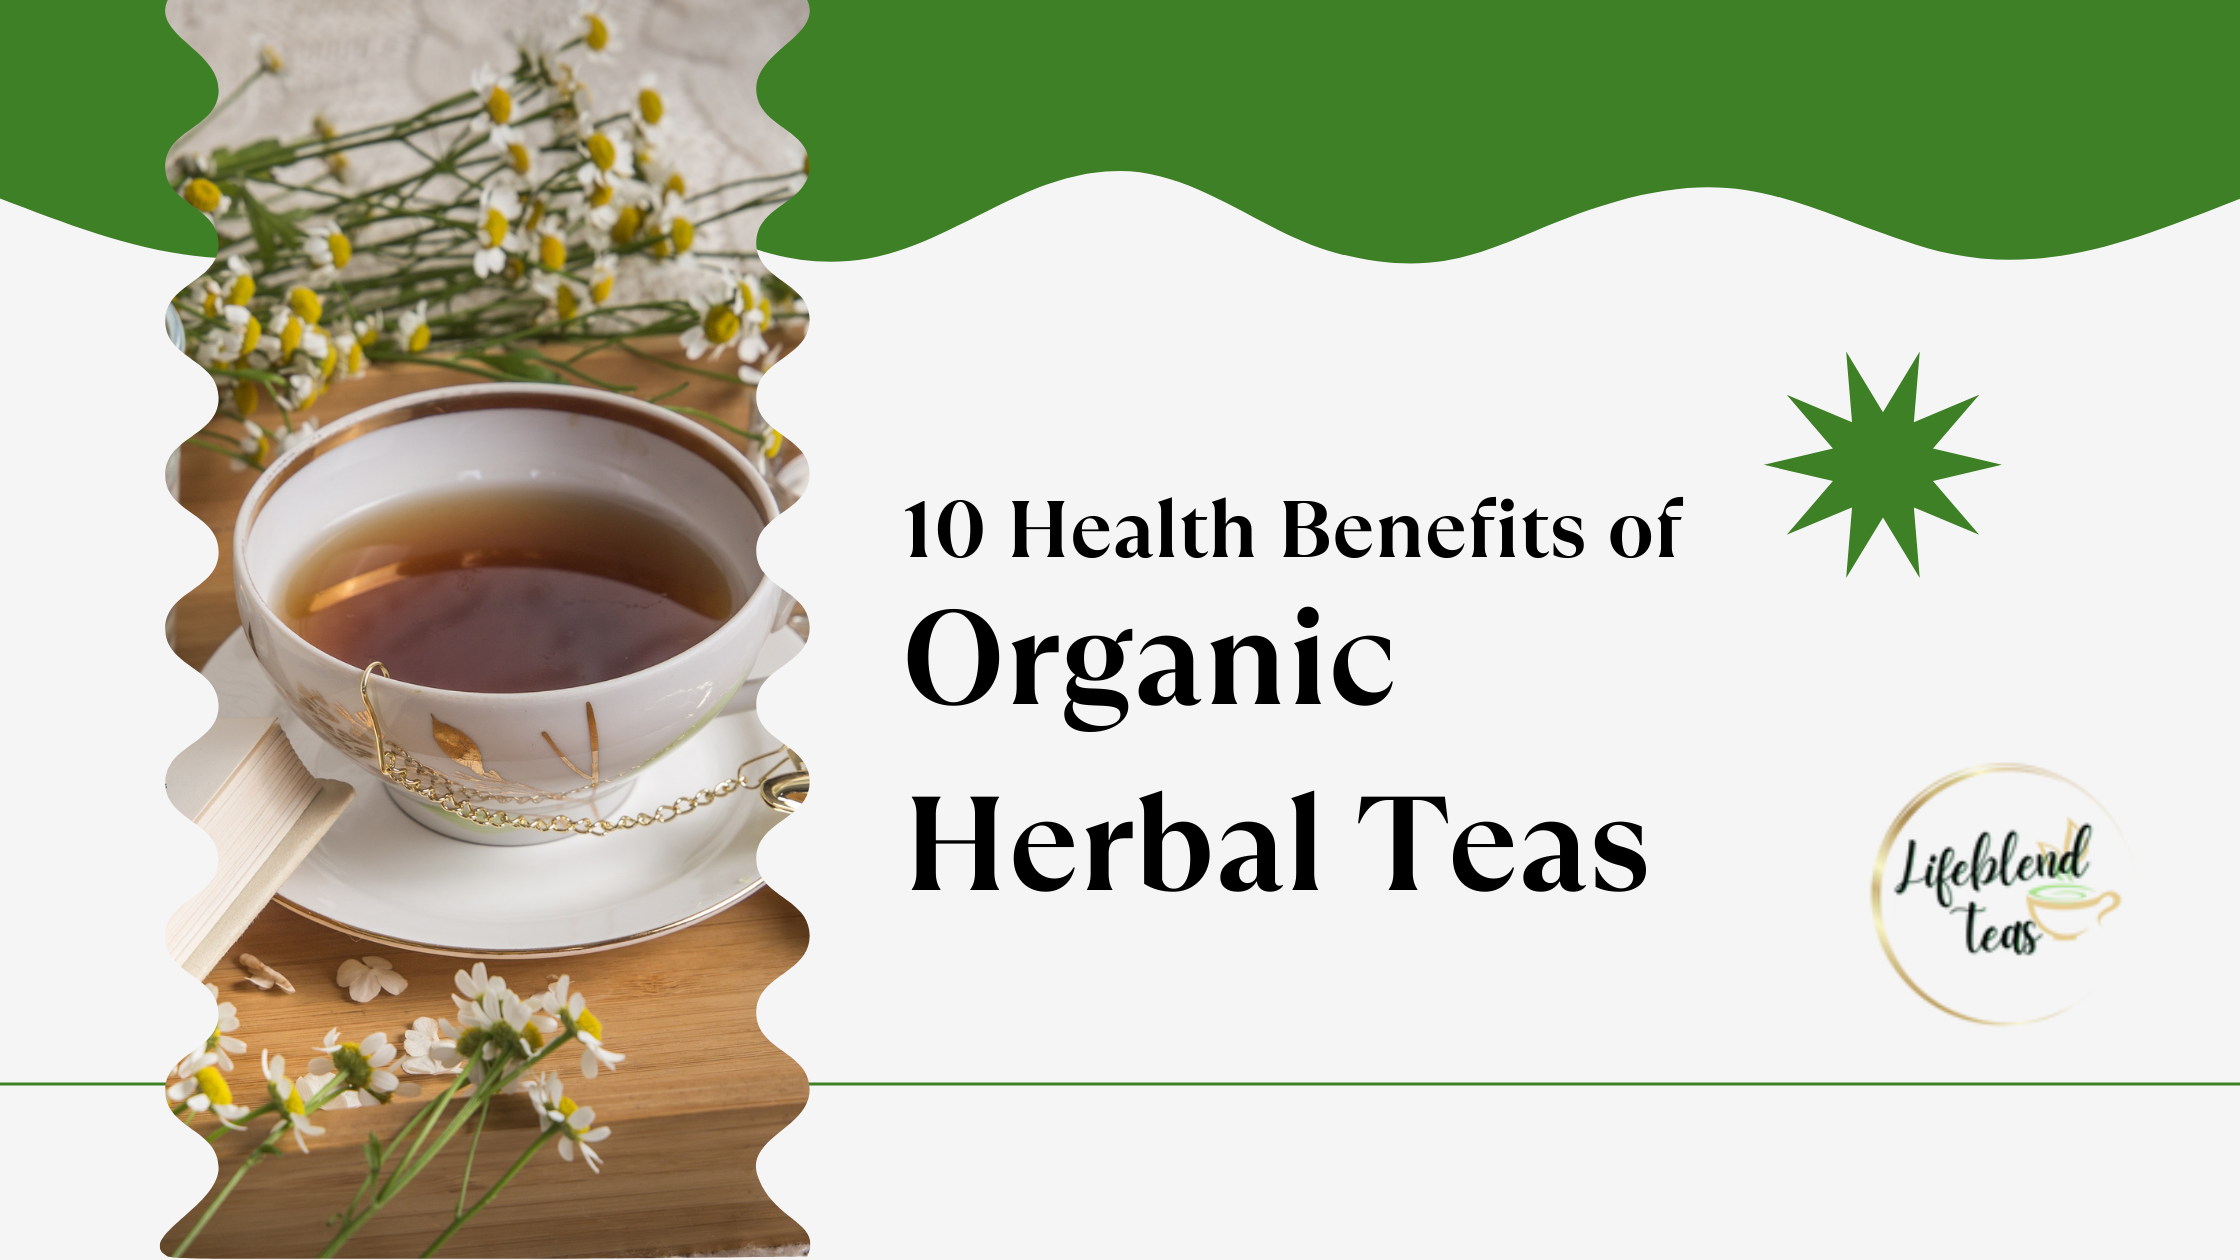 10 Health Benefits of Organic Herbal Teas